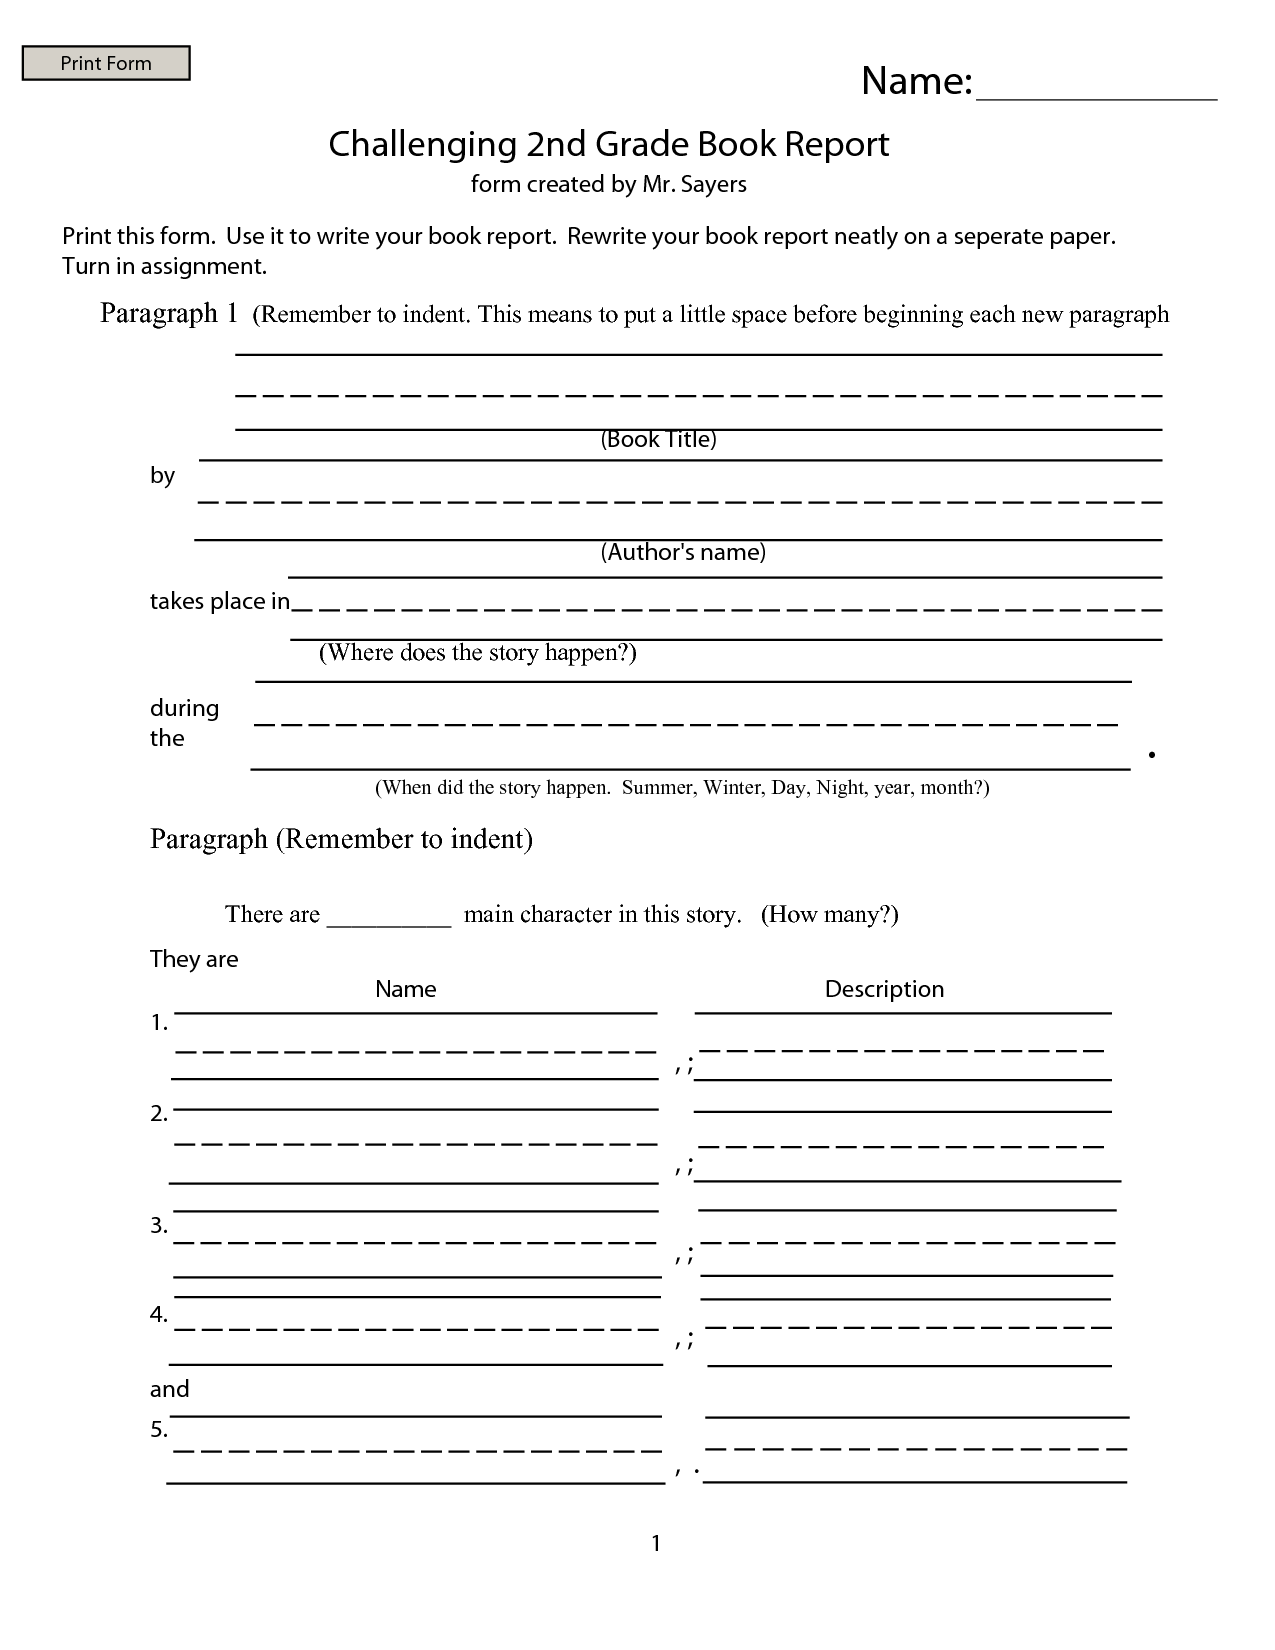 20nd grade nonfiction book report template Intended For Book Report Template 2Nd Grade